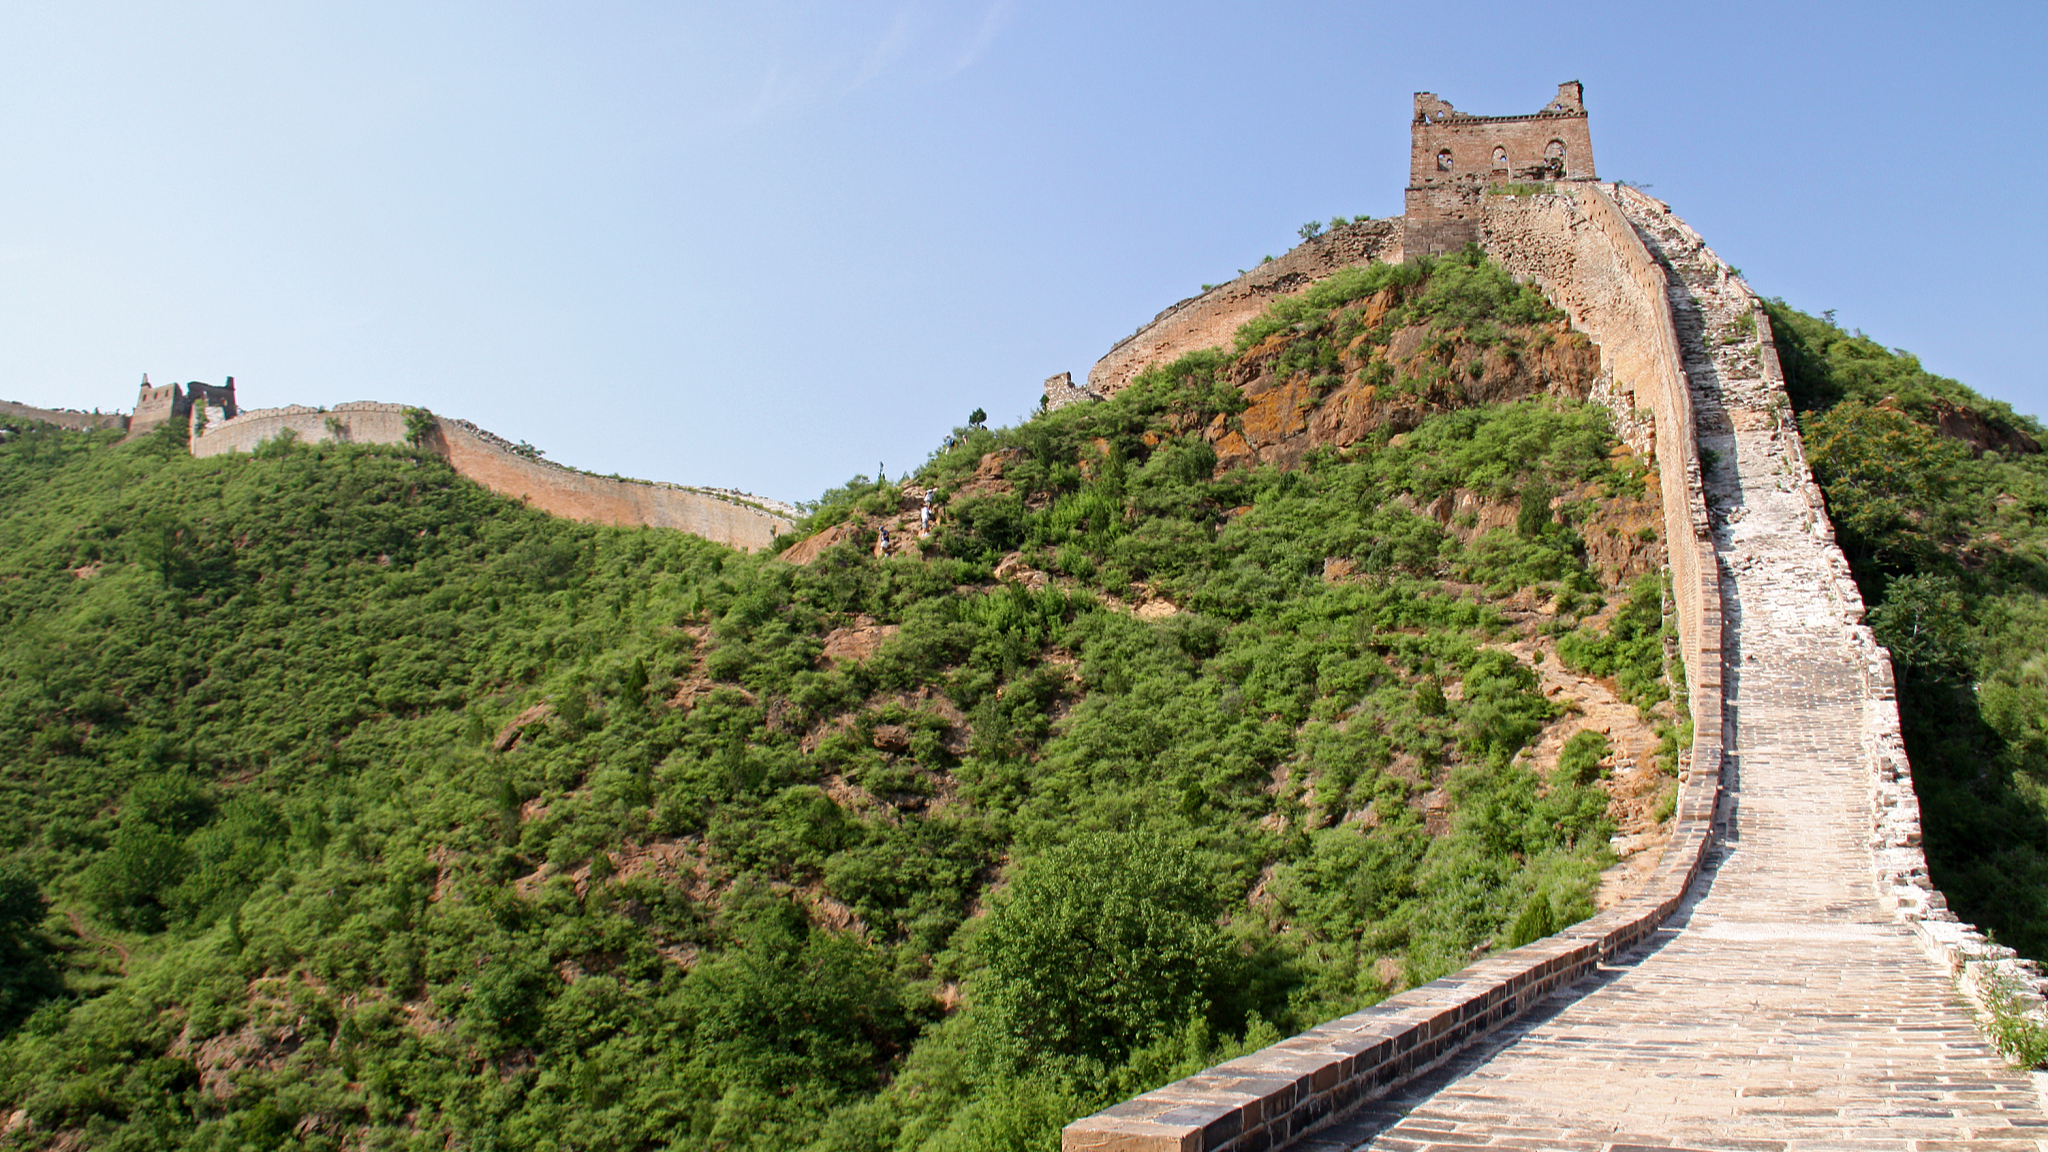 Live: Jinshanling Great Wall reveals its true splendor in summer – Ep. 5